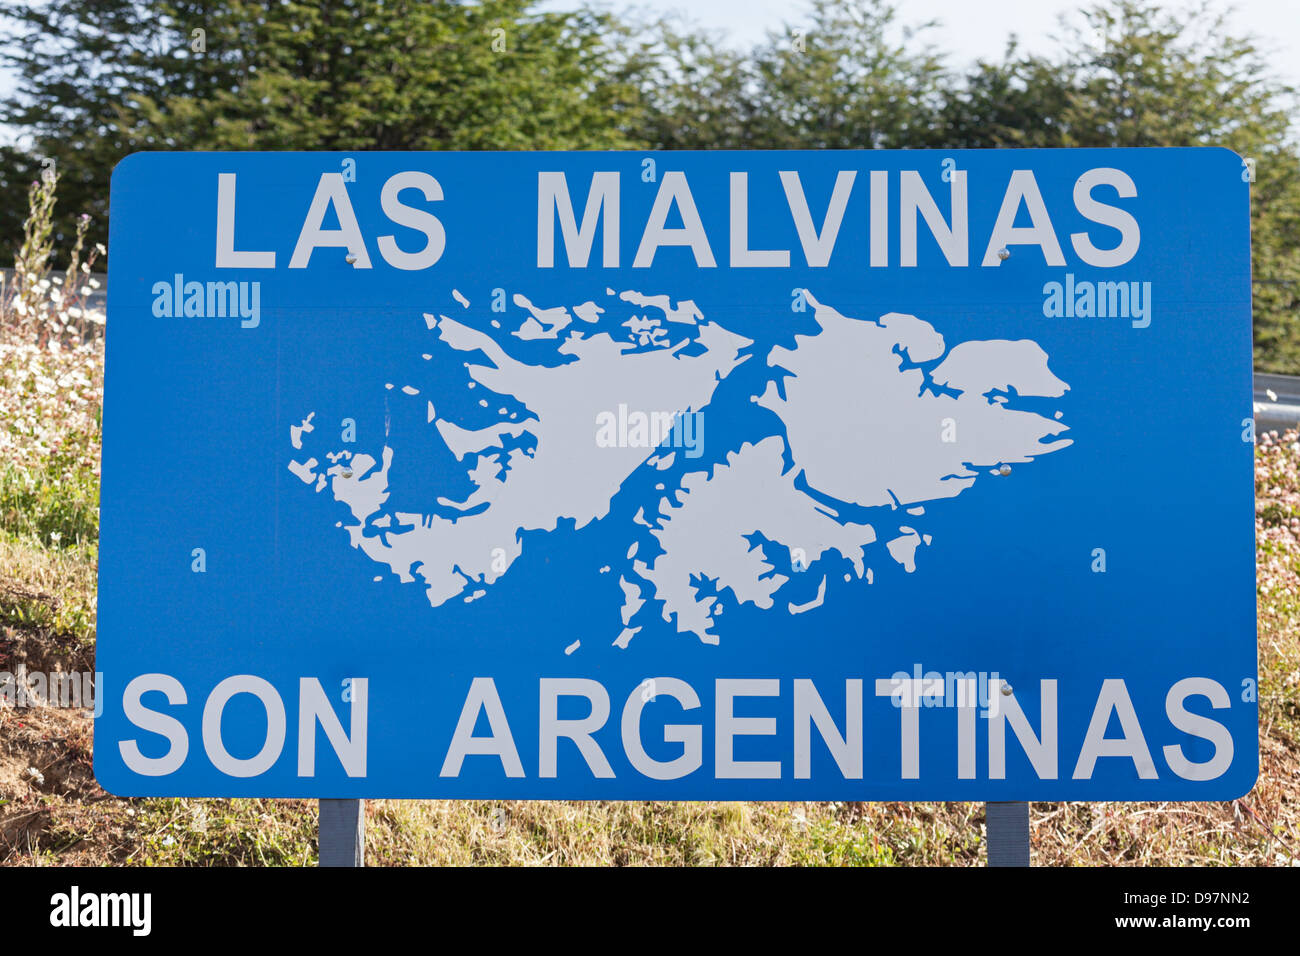 Las Malvinas son Argentinas - road sign seen in Argentina Stock Photo